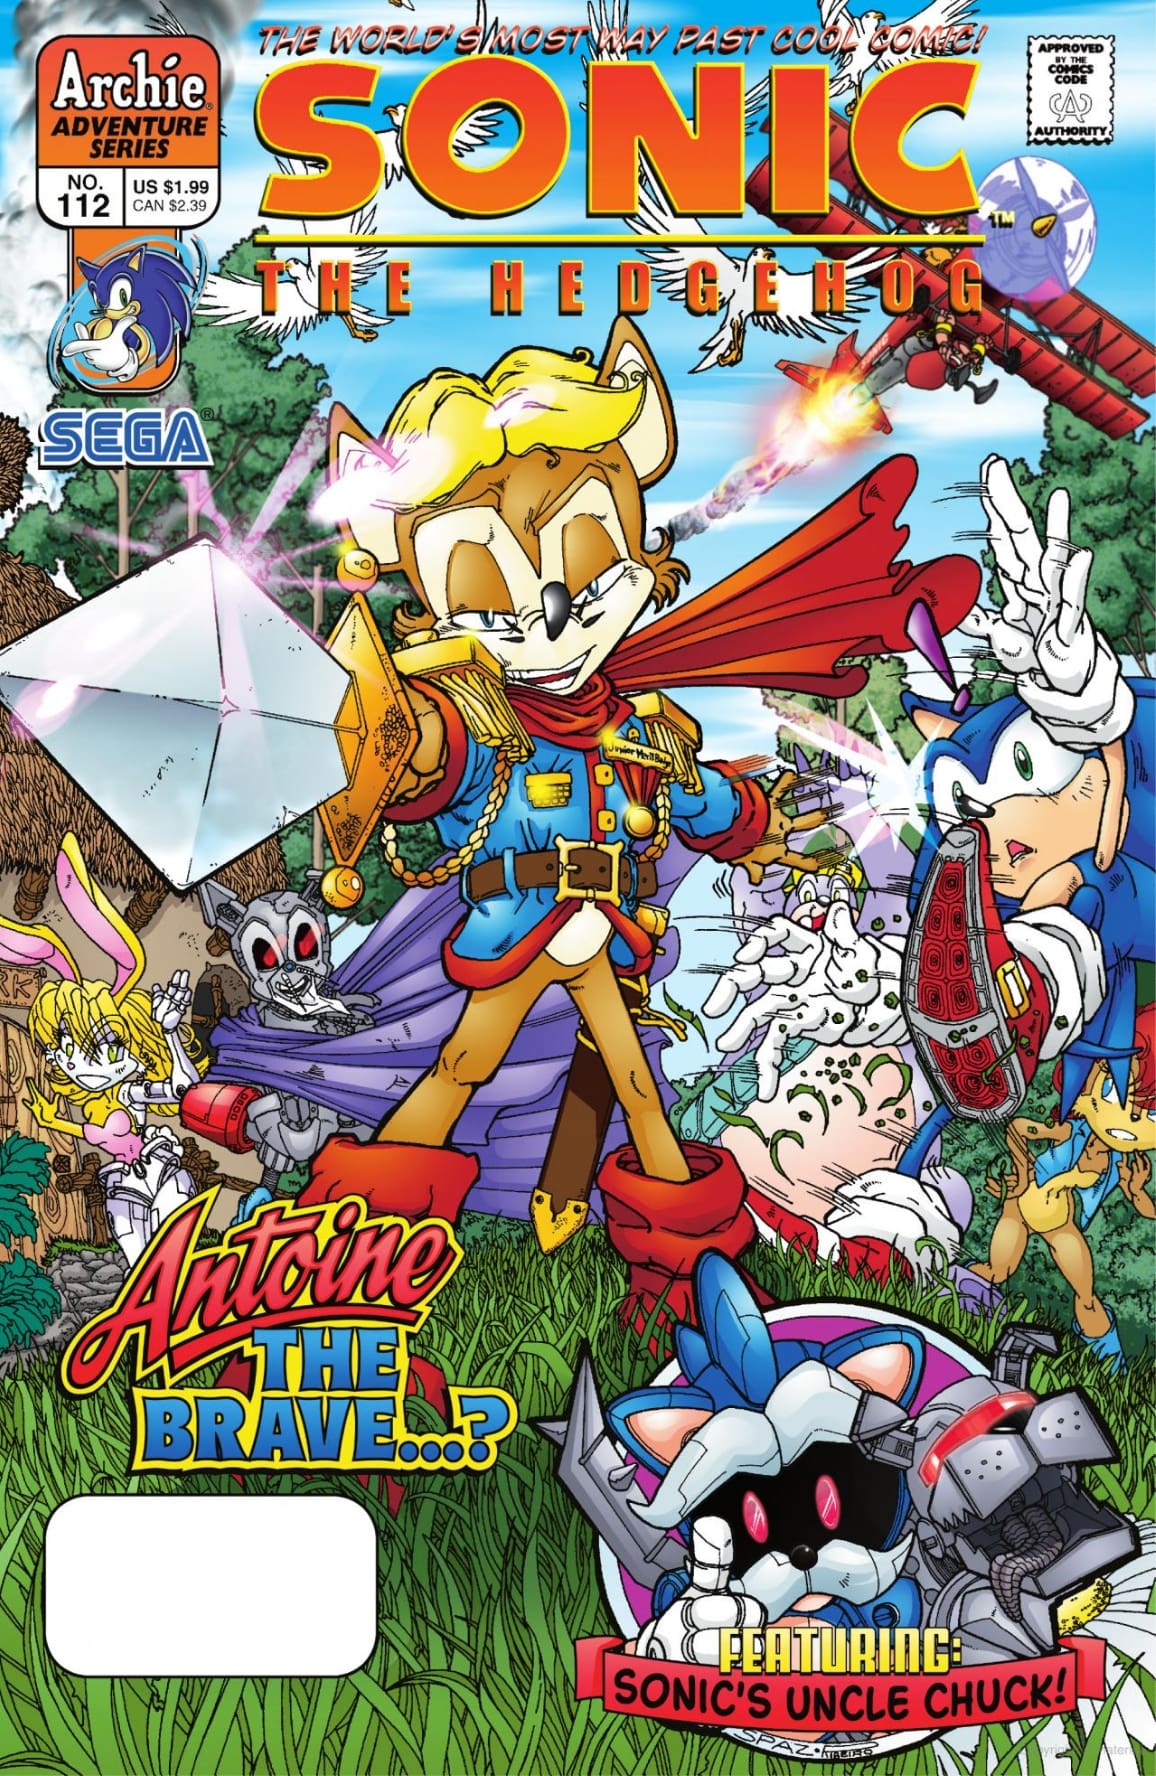 Sonic the hedgehog 242, Wikisonic Wiki